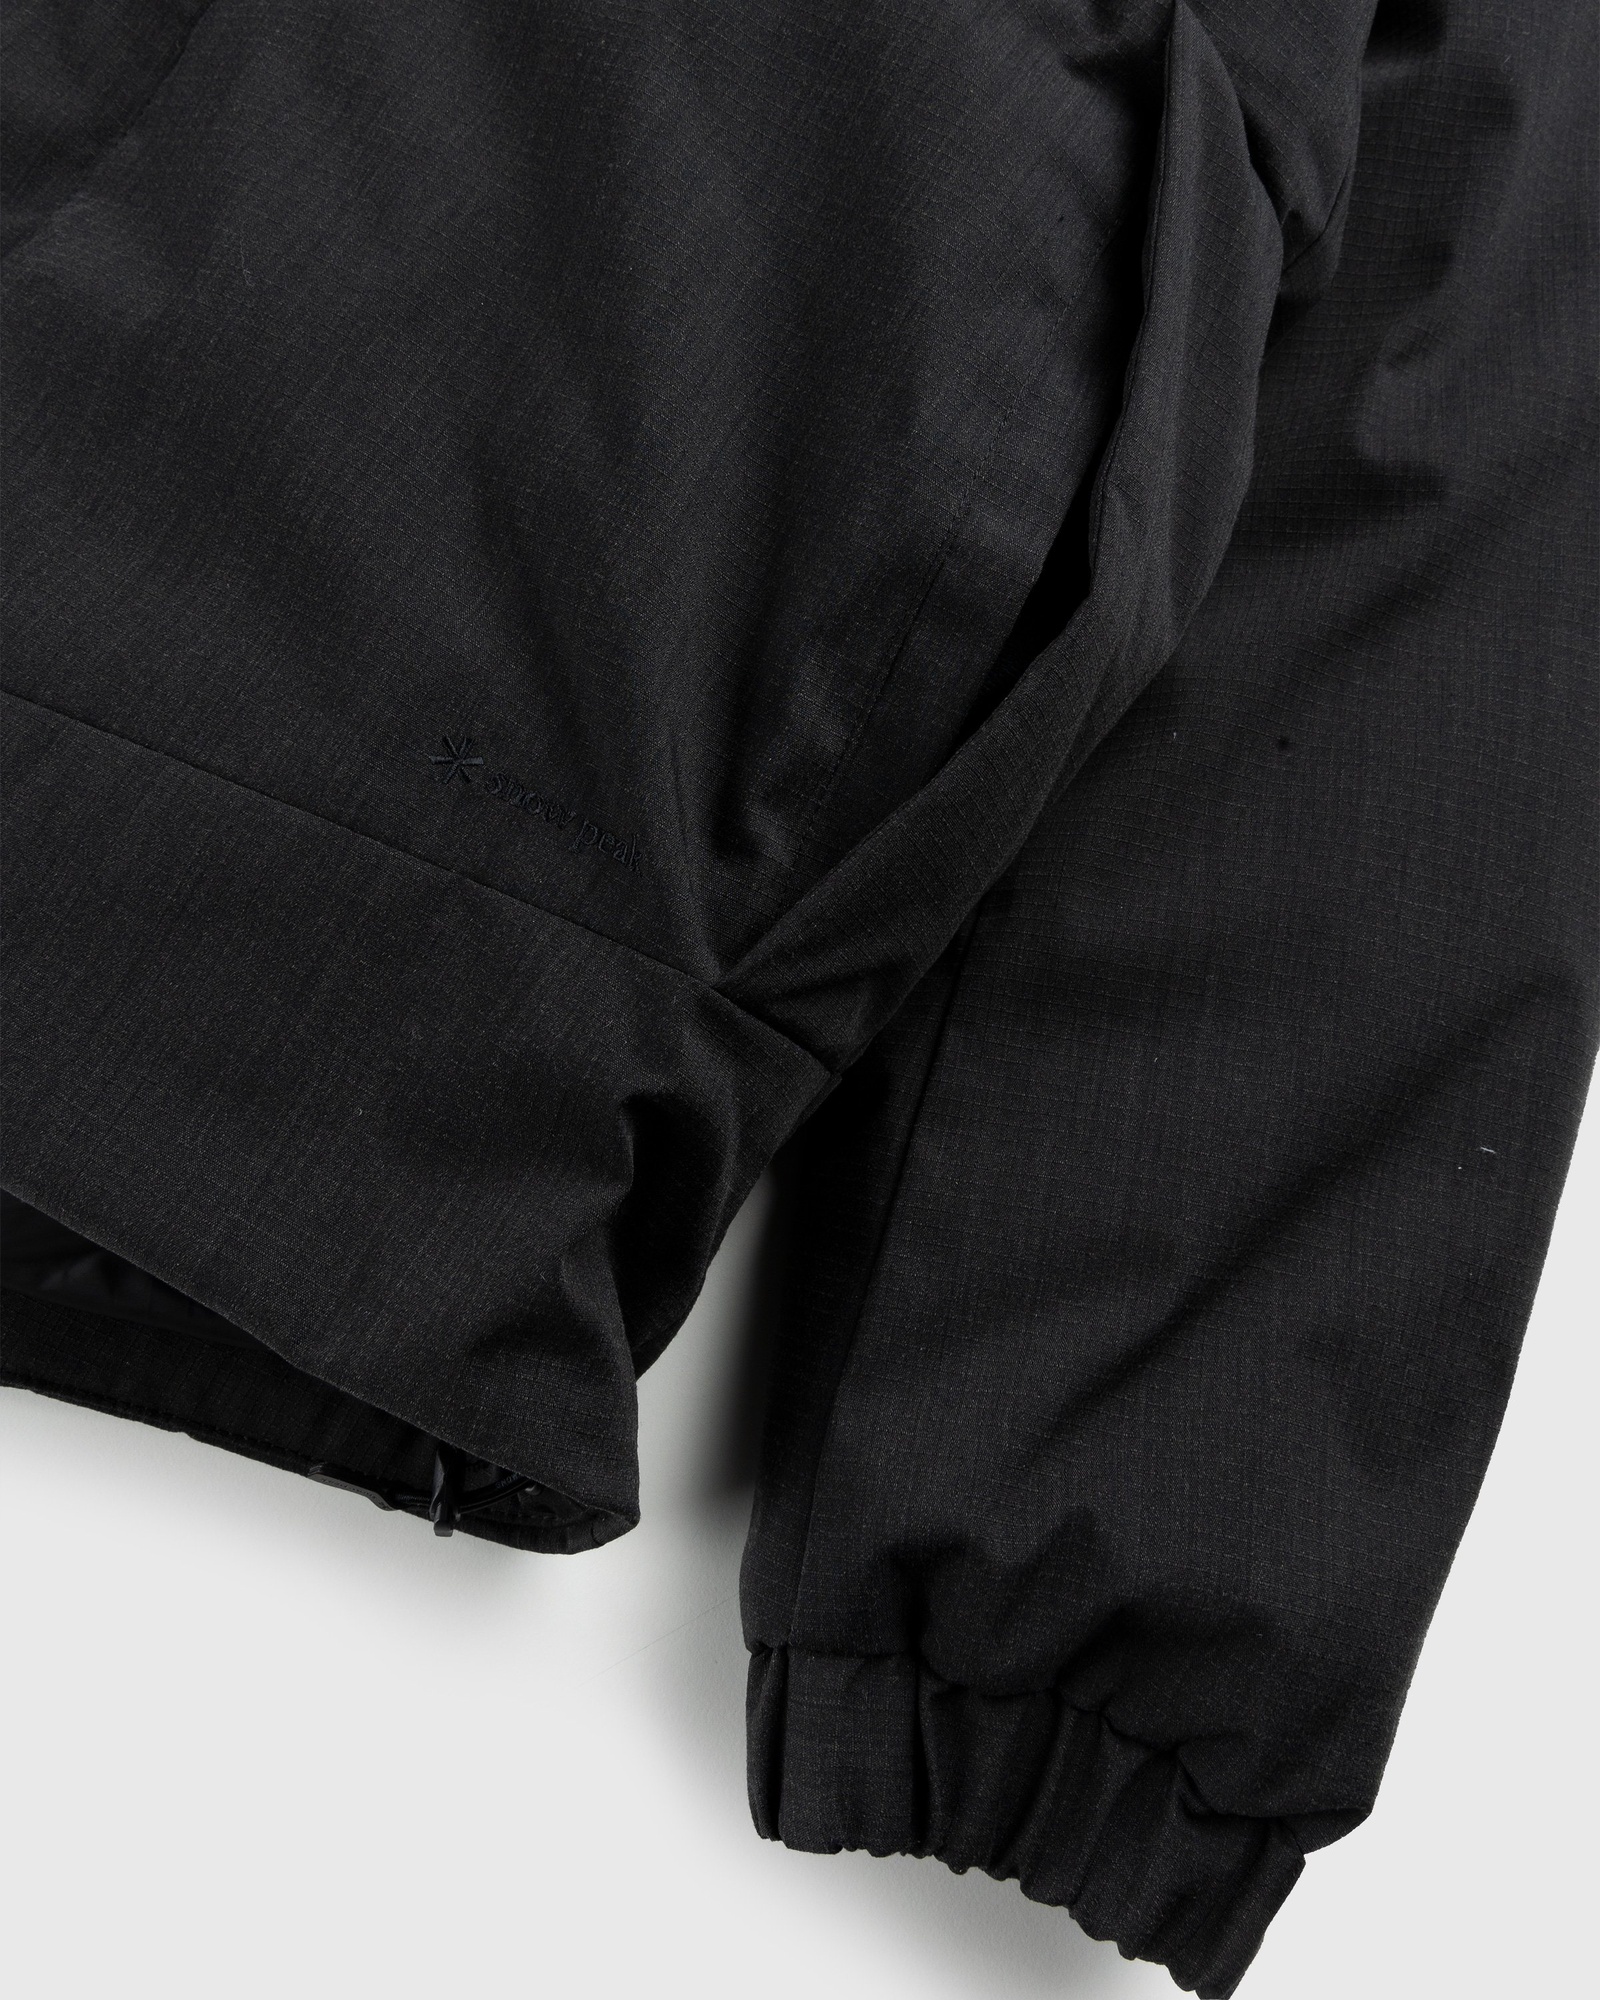 Snow Peak – Fire-Resistant 2 Layer Down Jacket Black | Highsnobiety Shop